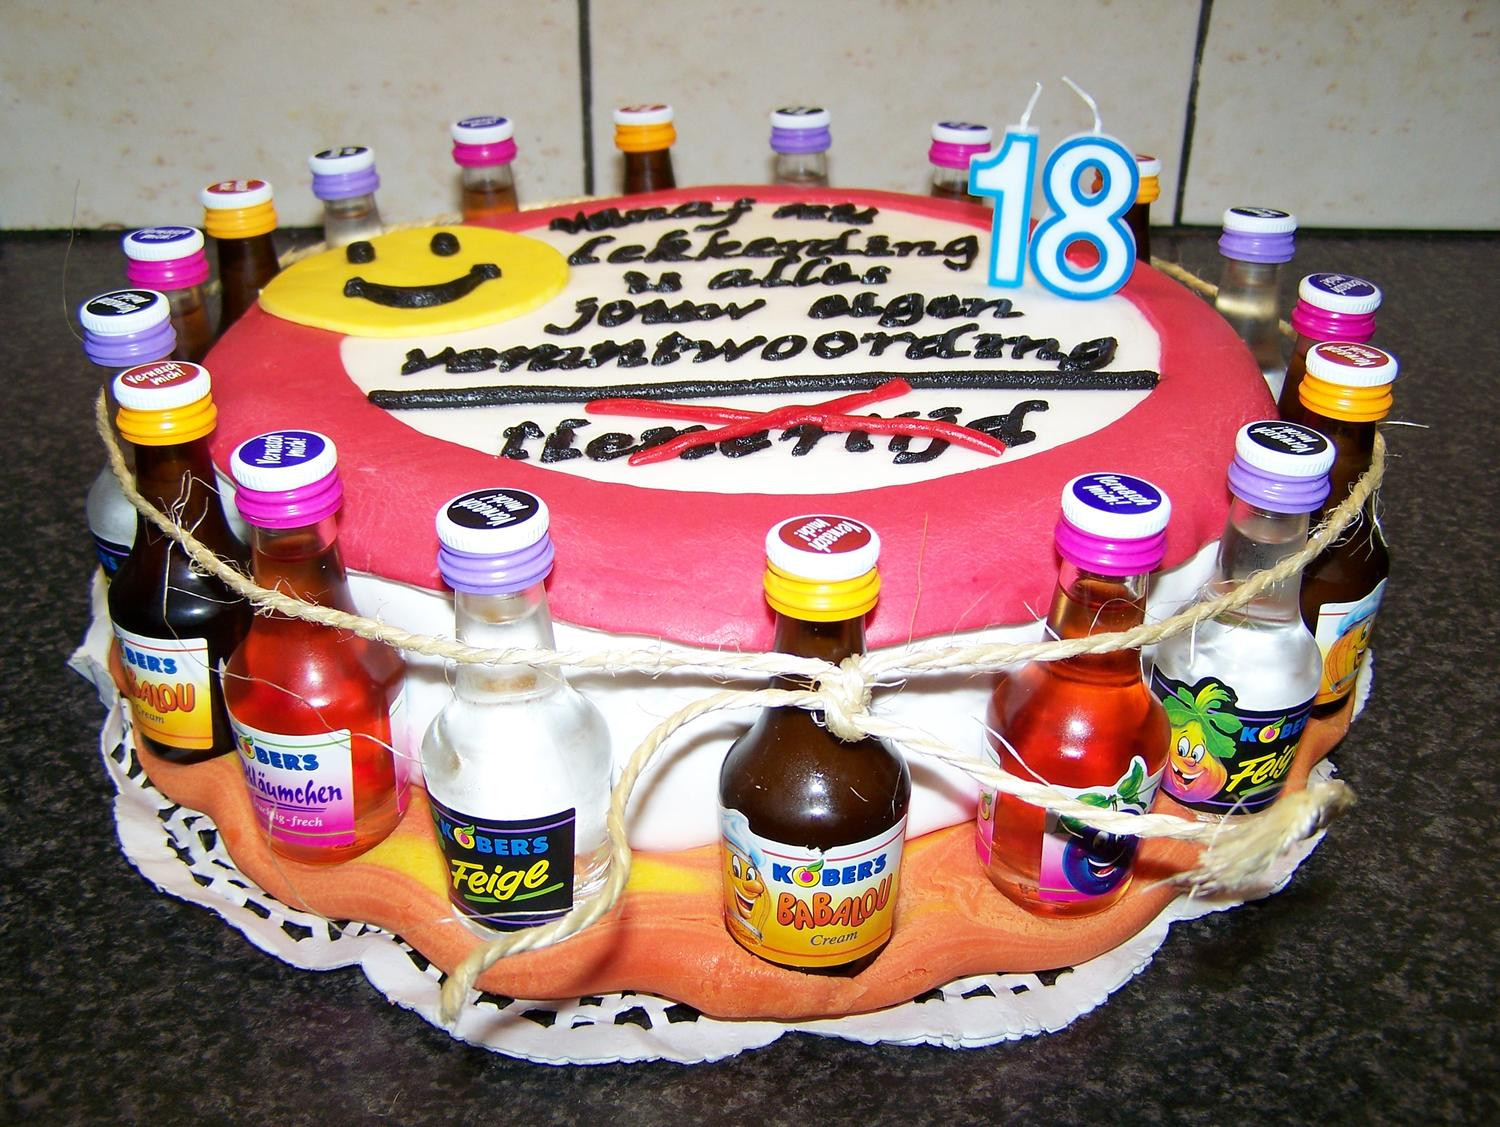 Geschenkideen 18. Geburtstag
 Robby s Torte zum 18 Geburtstag Rezept kochbar